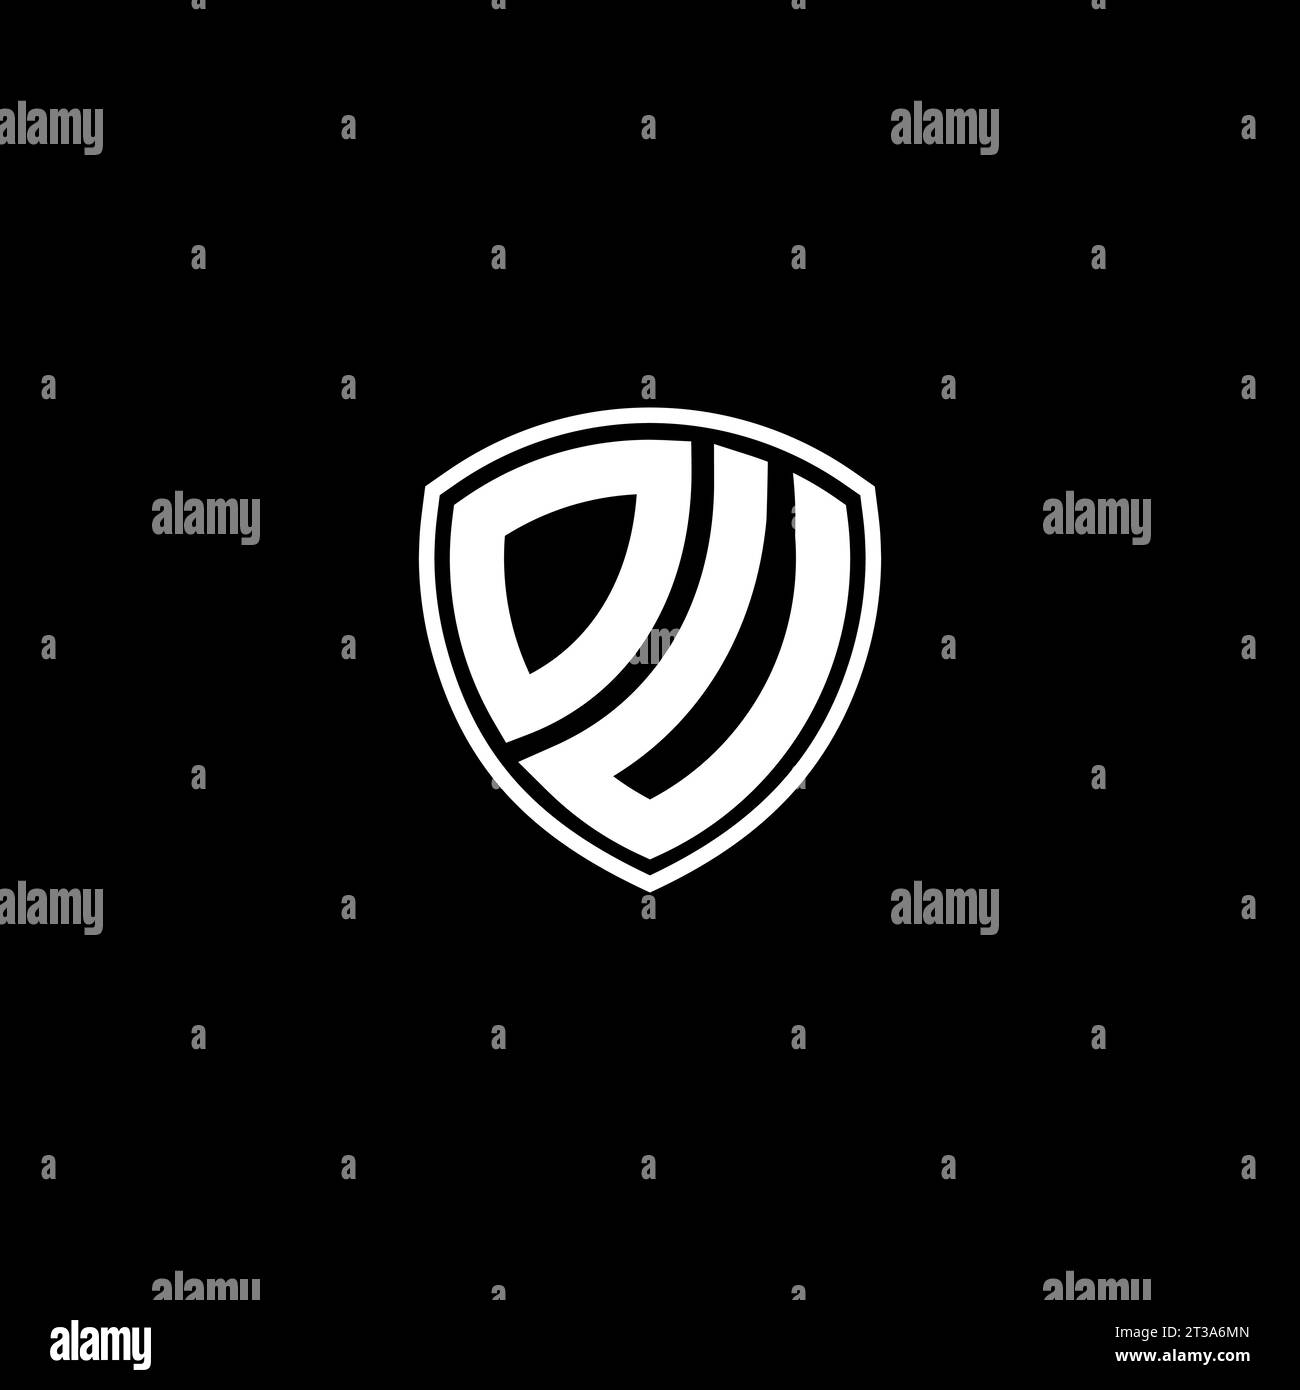 DU logo monogram emblem style with shield shape design template ideas Stock Vector